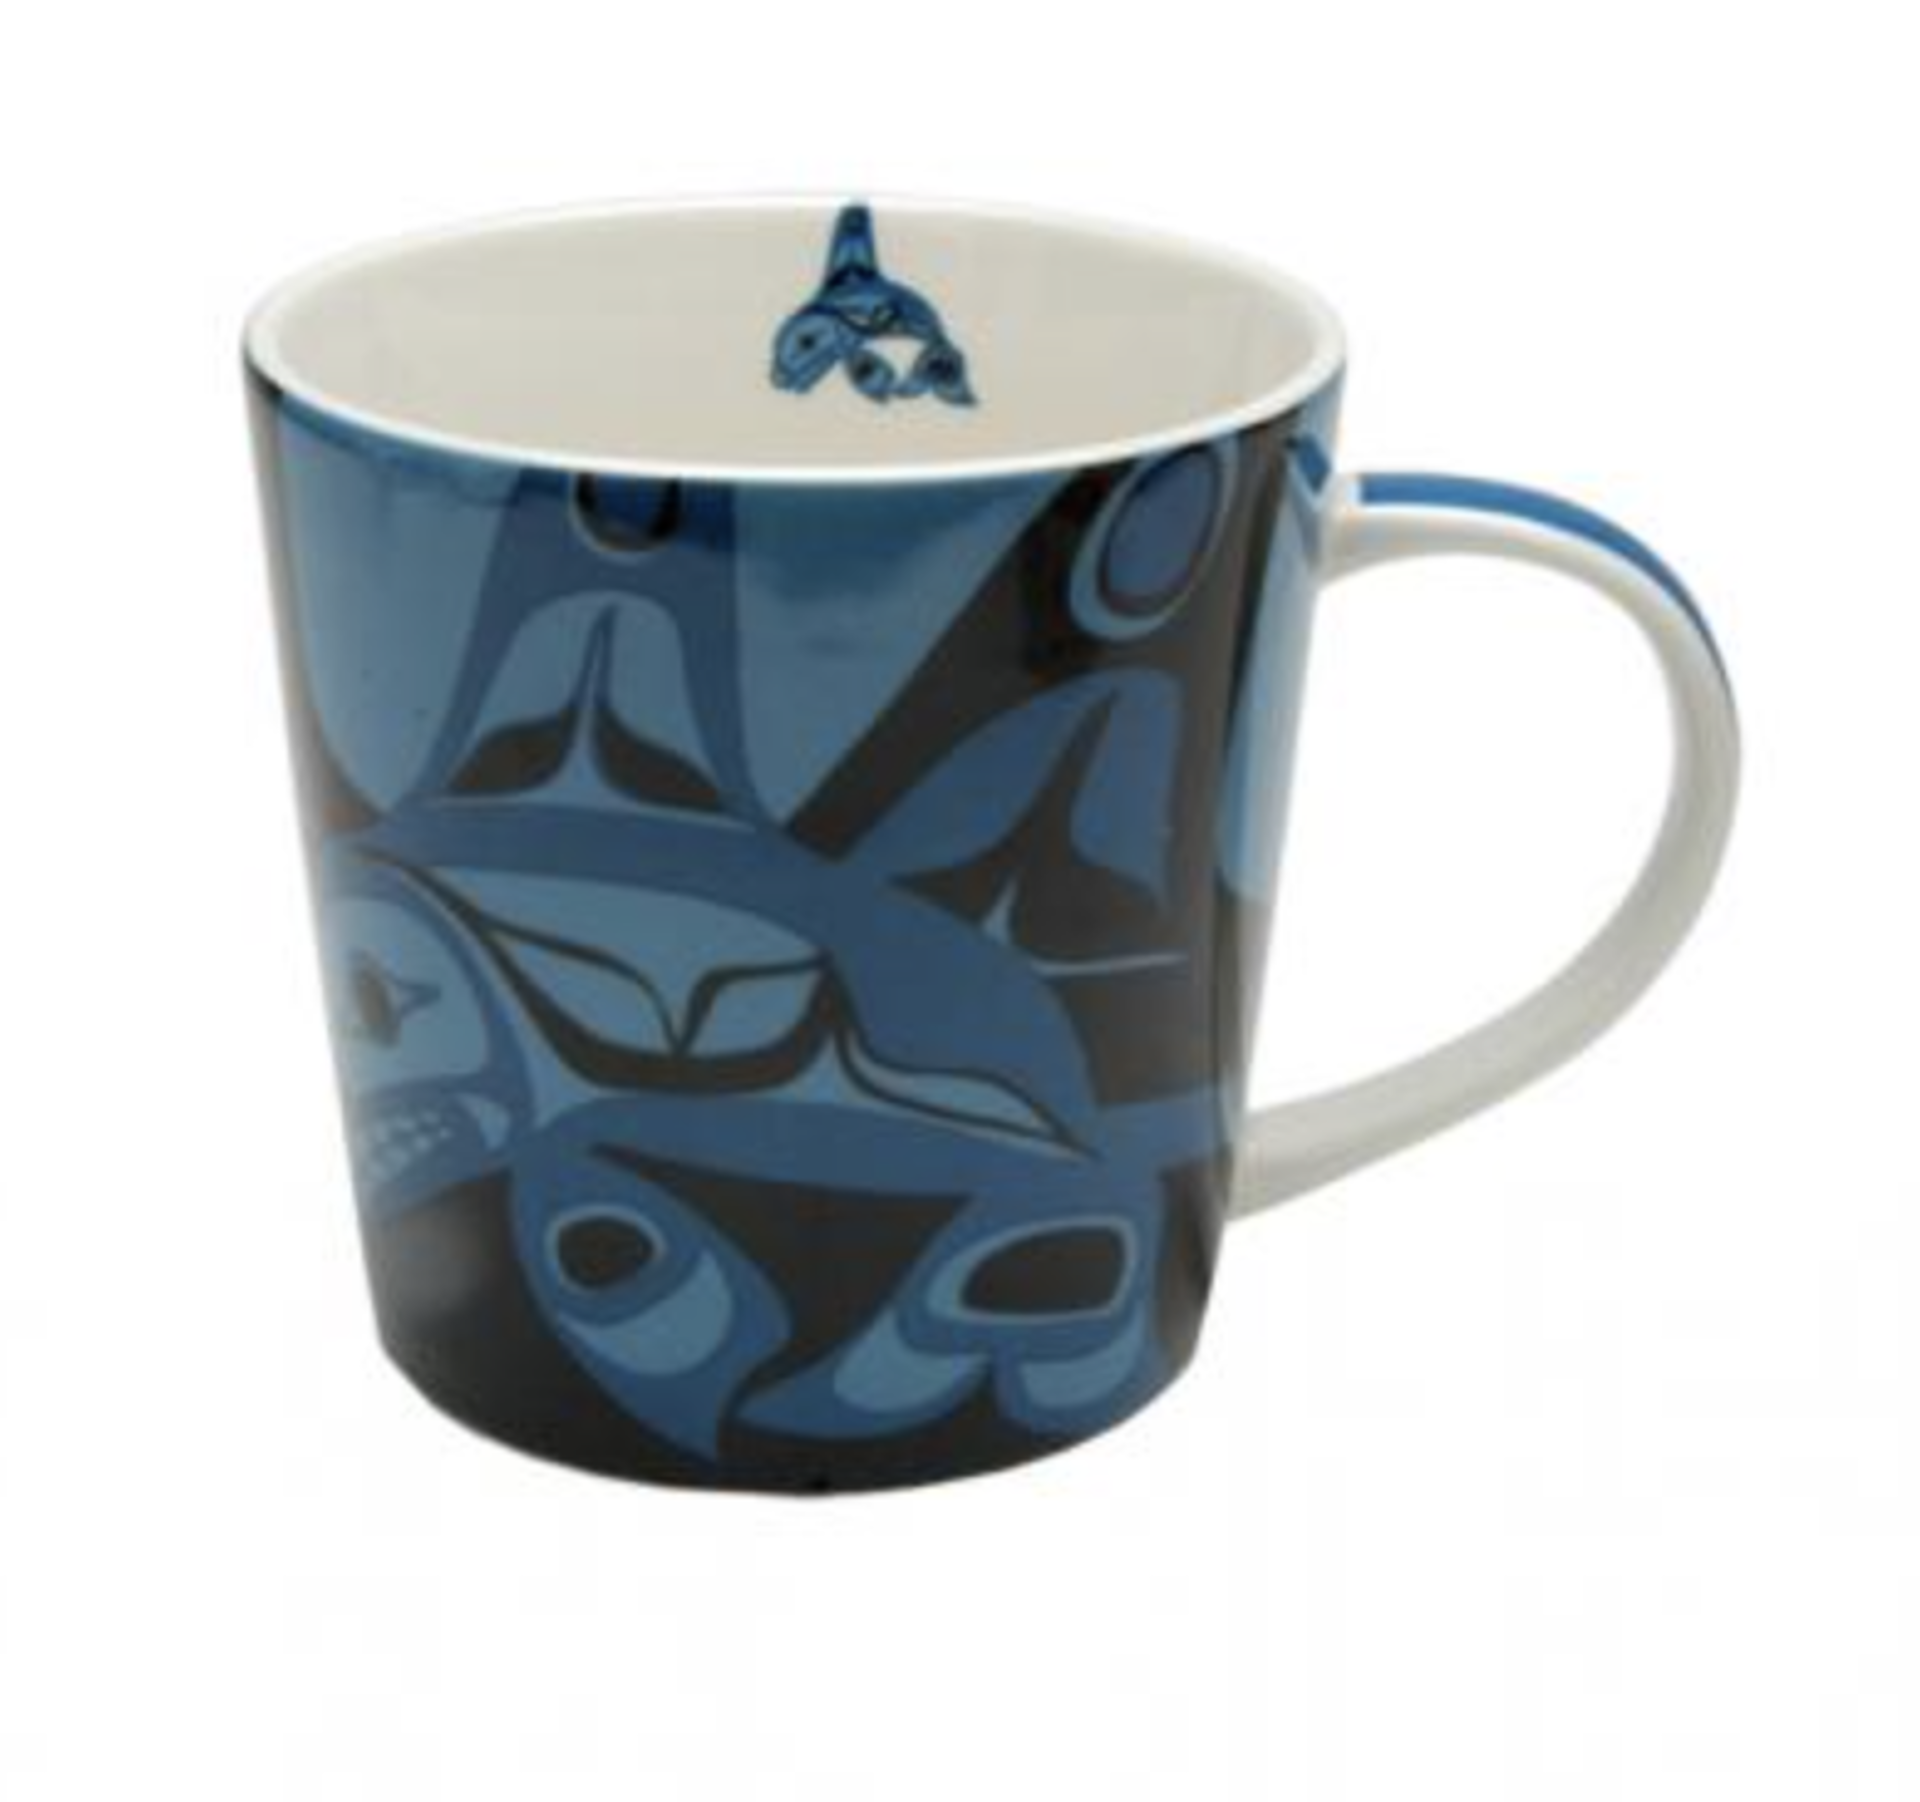 Orca Ceramic Boxed Mug by Bill Helin